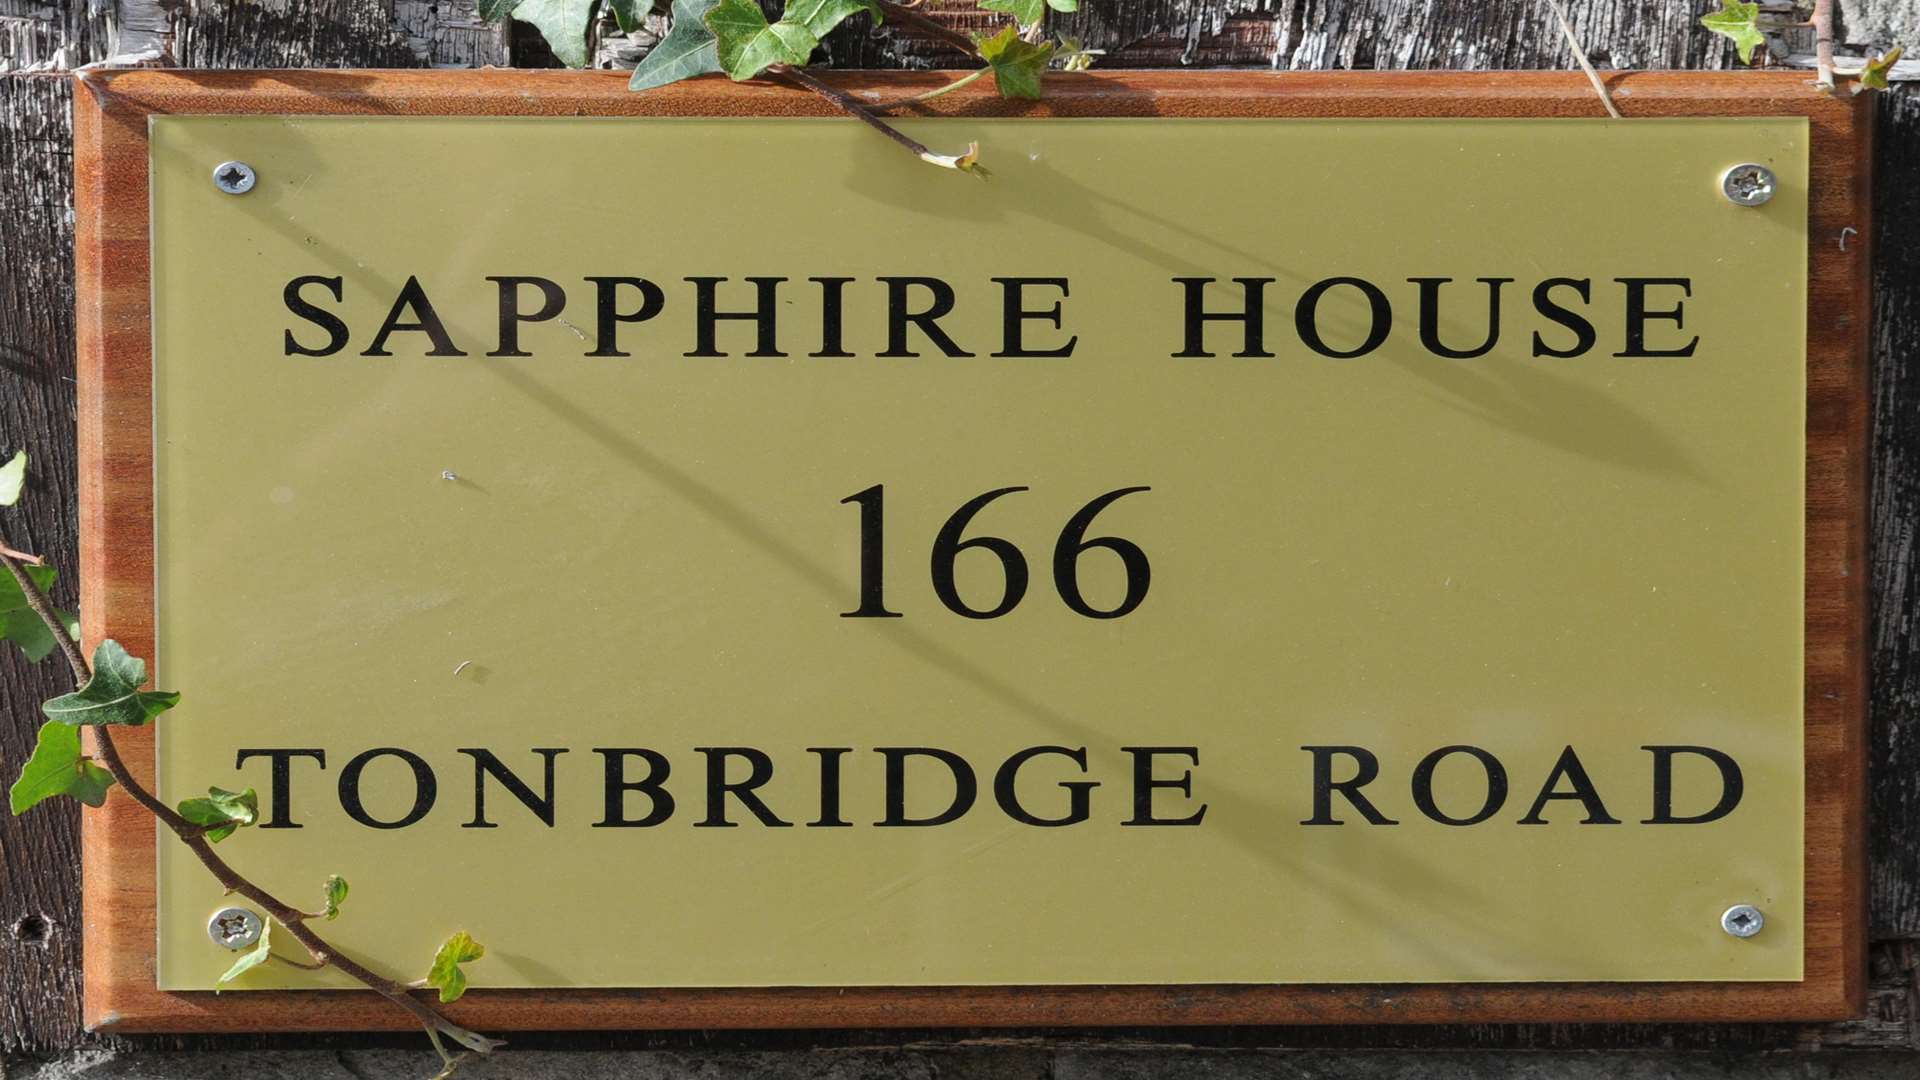 Sapphire House Care Home in Tonbridge Road